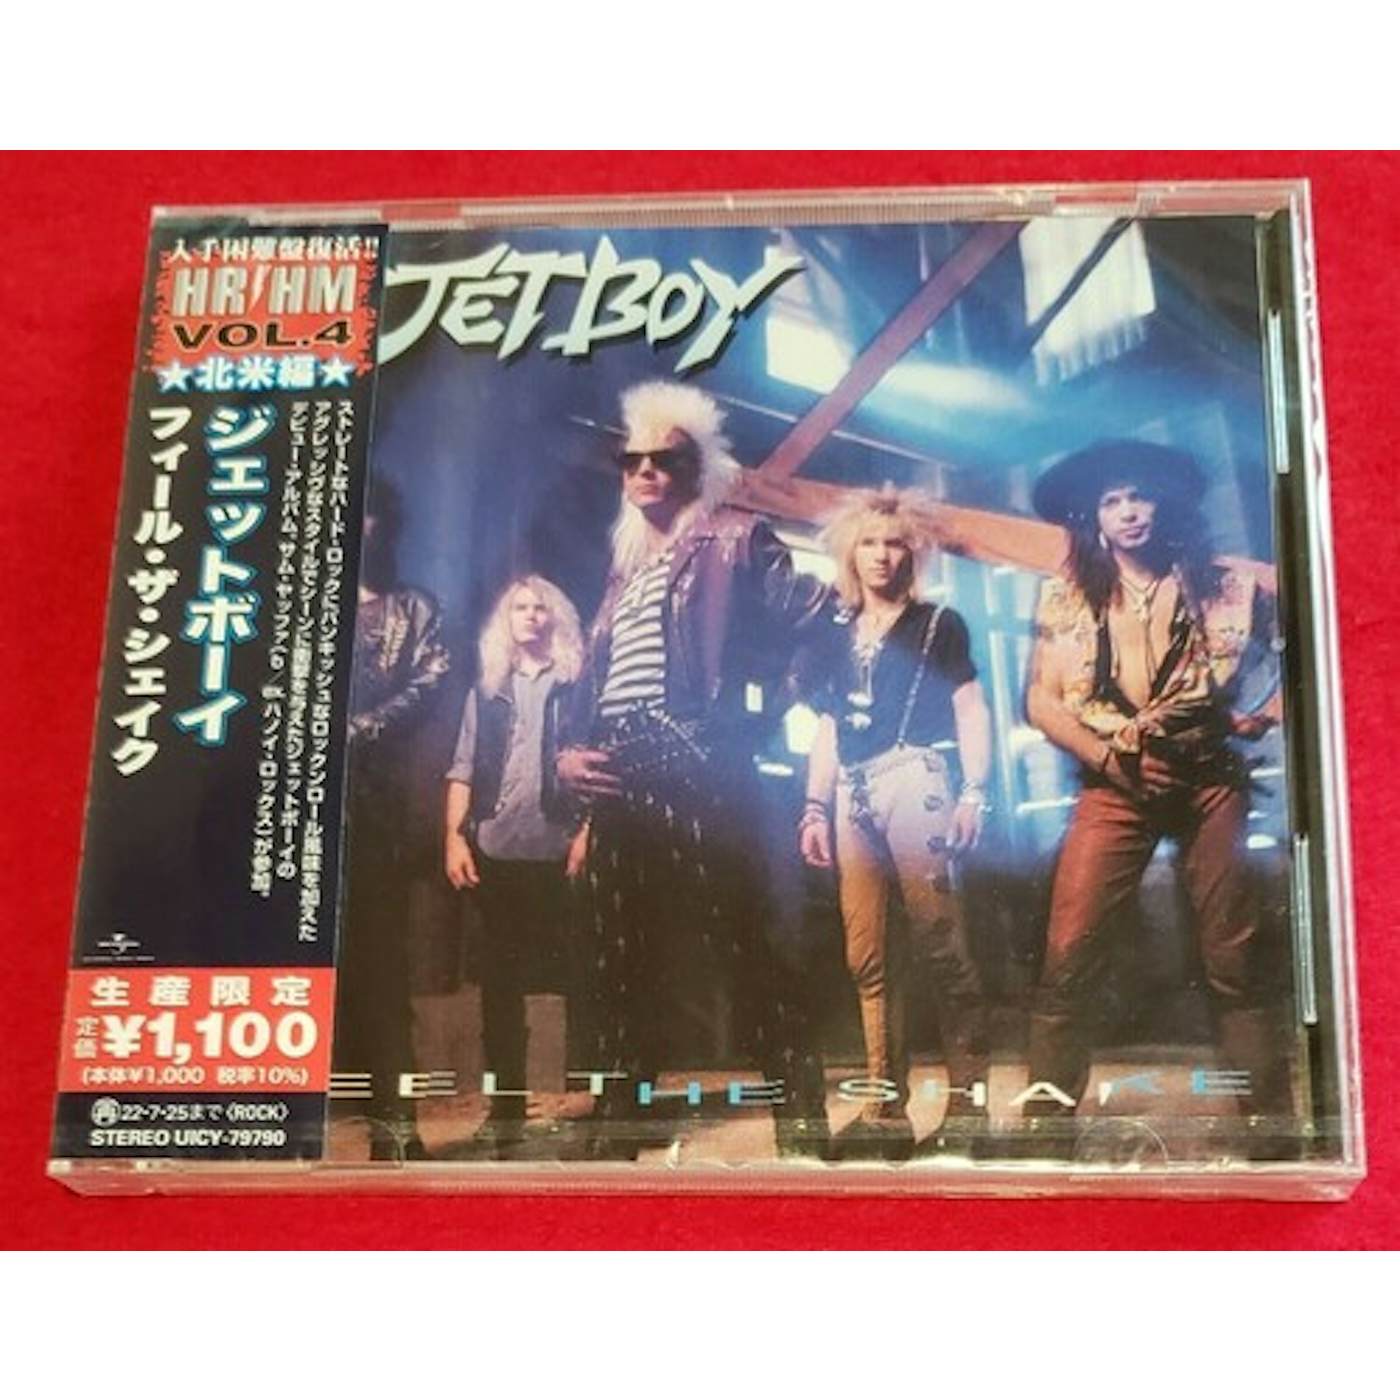 Jetboy FEEL THE SHAKE CD